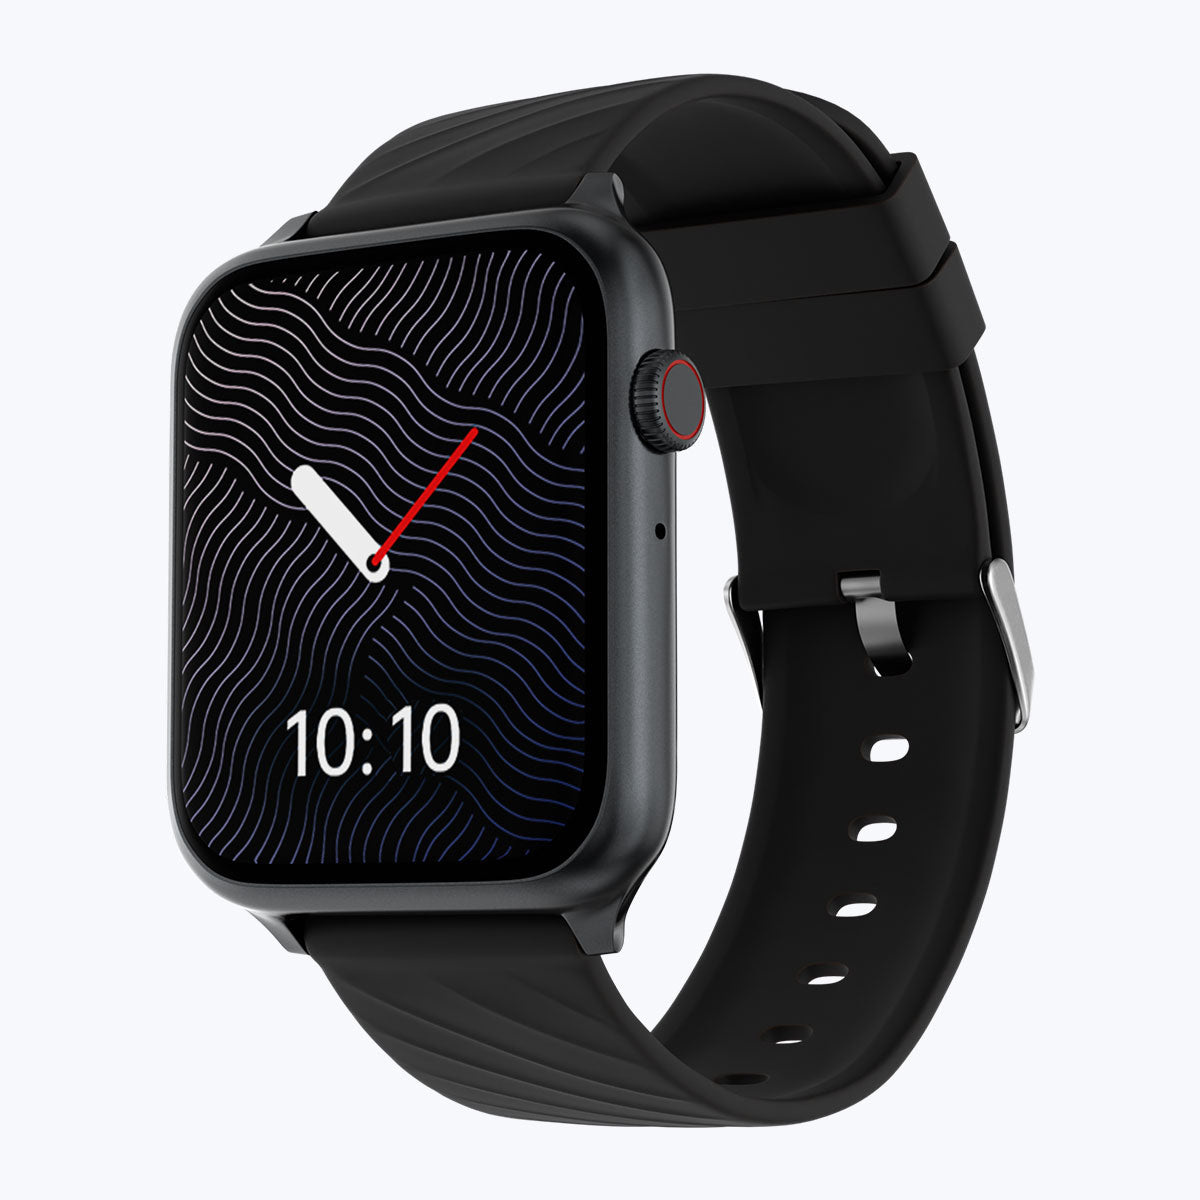 Iconic Lite - Smart Watch - Zebronics